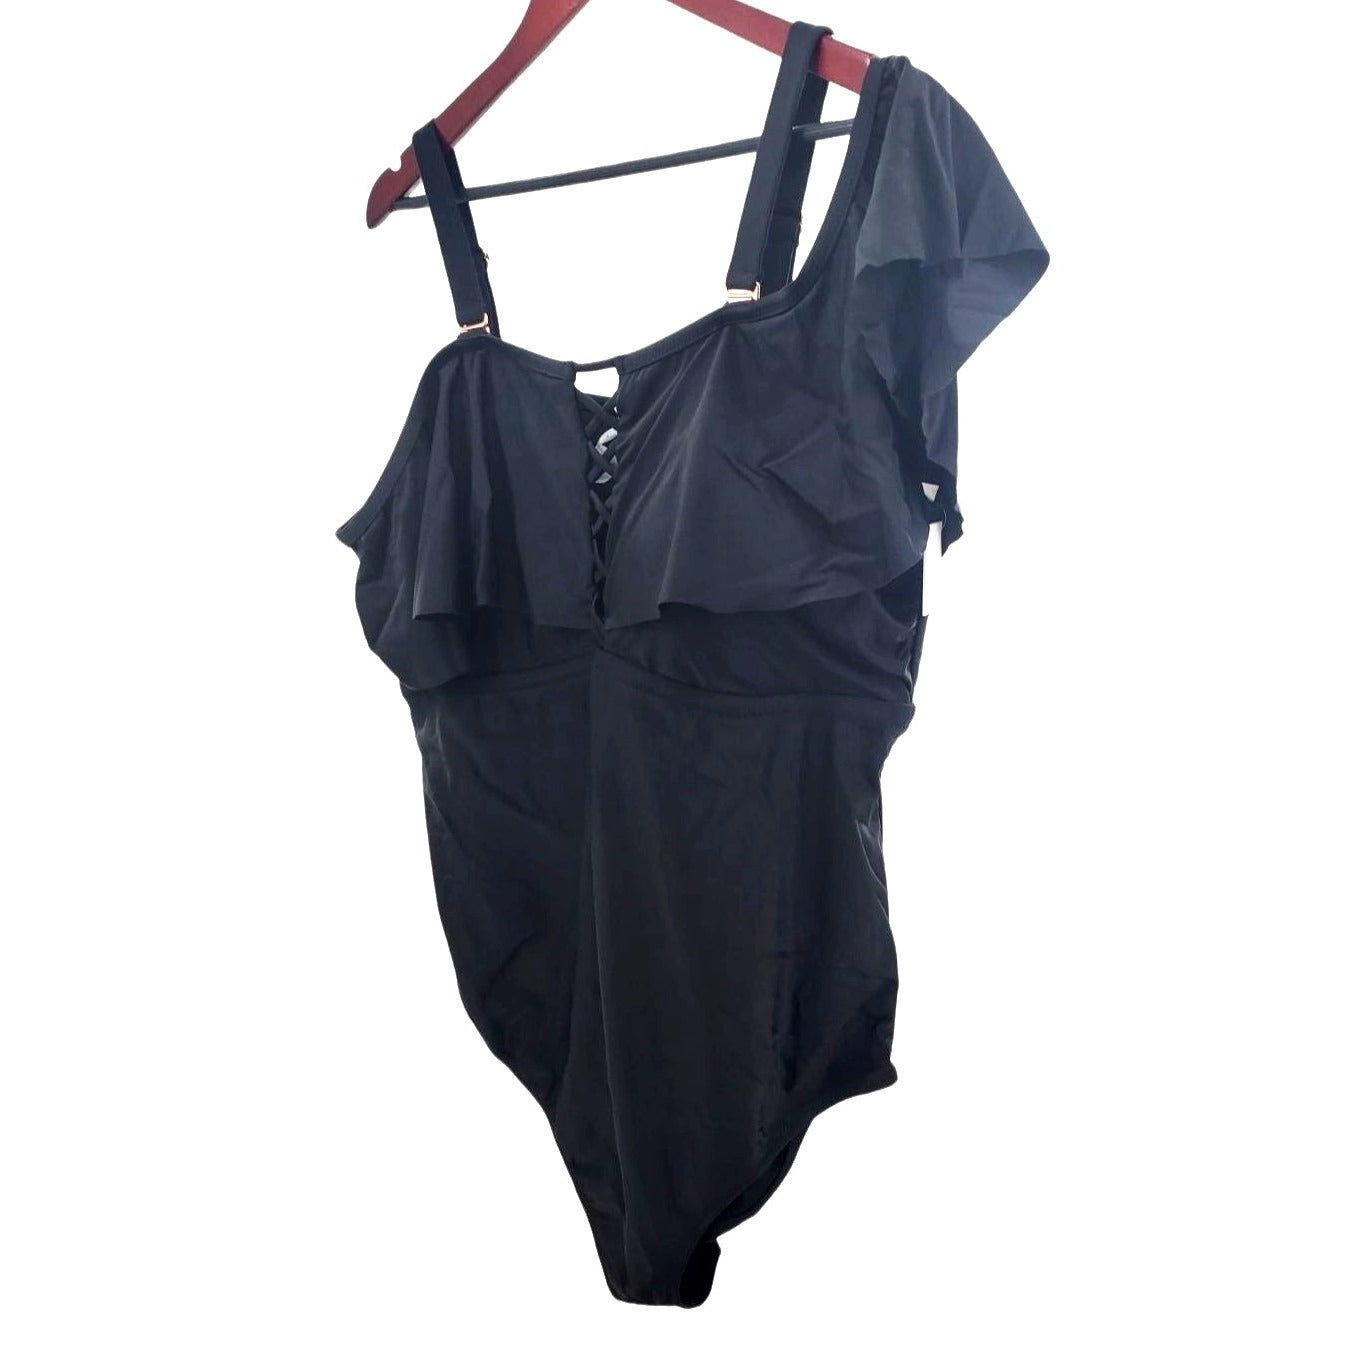 RAISINS CURVE One-piece Swimsuit Caicos Ruffle Swimwear Removable straps